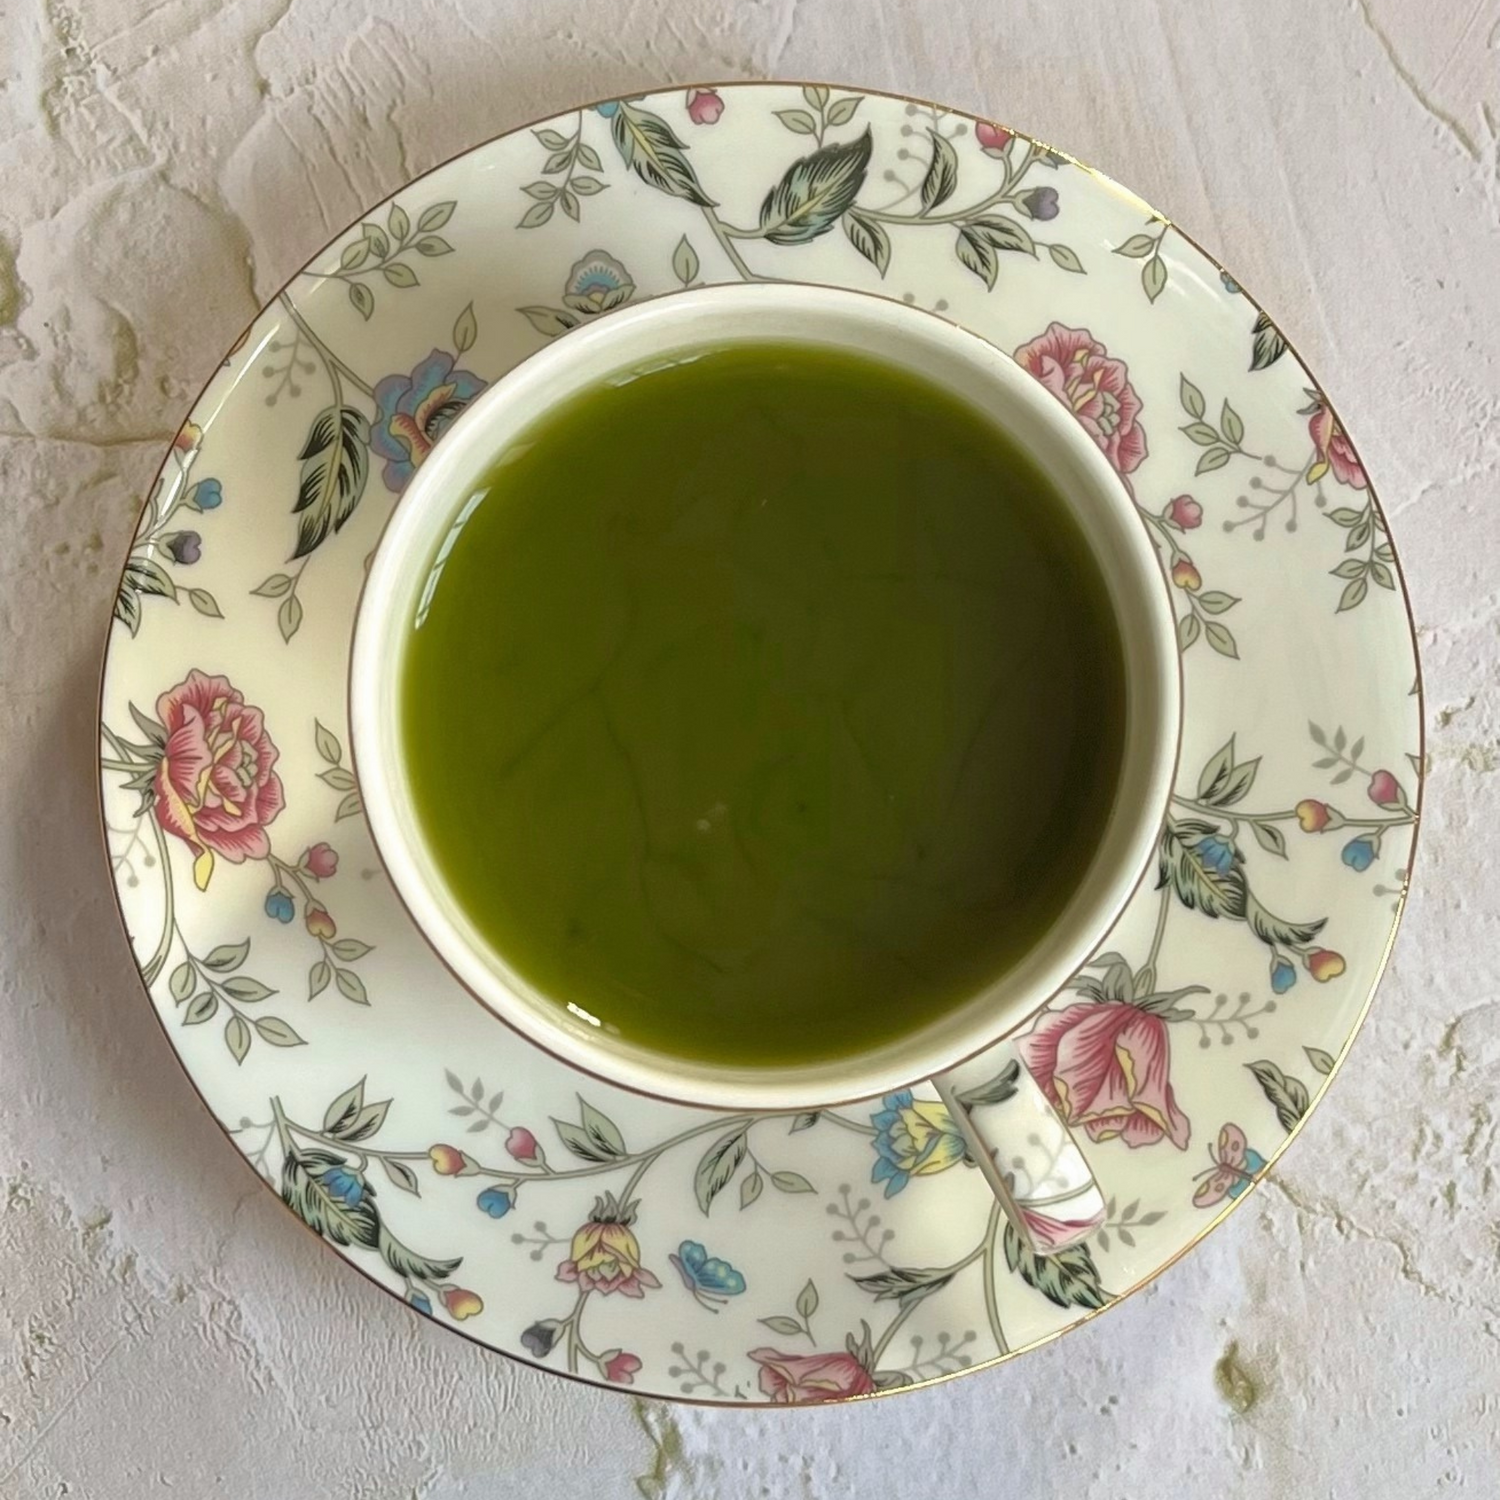 Buy Online : Season 2024 Matcha Green Tea - Chai Experience